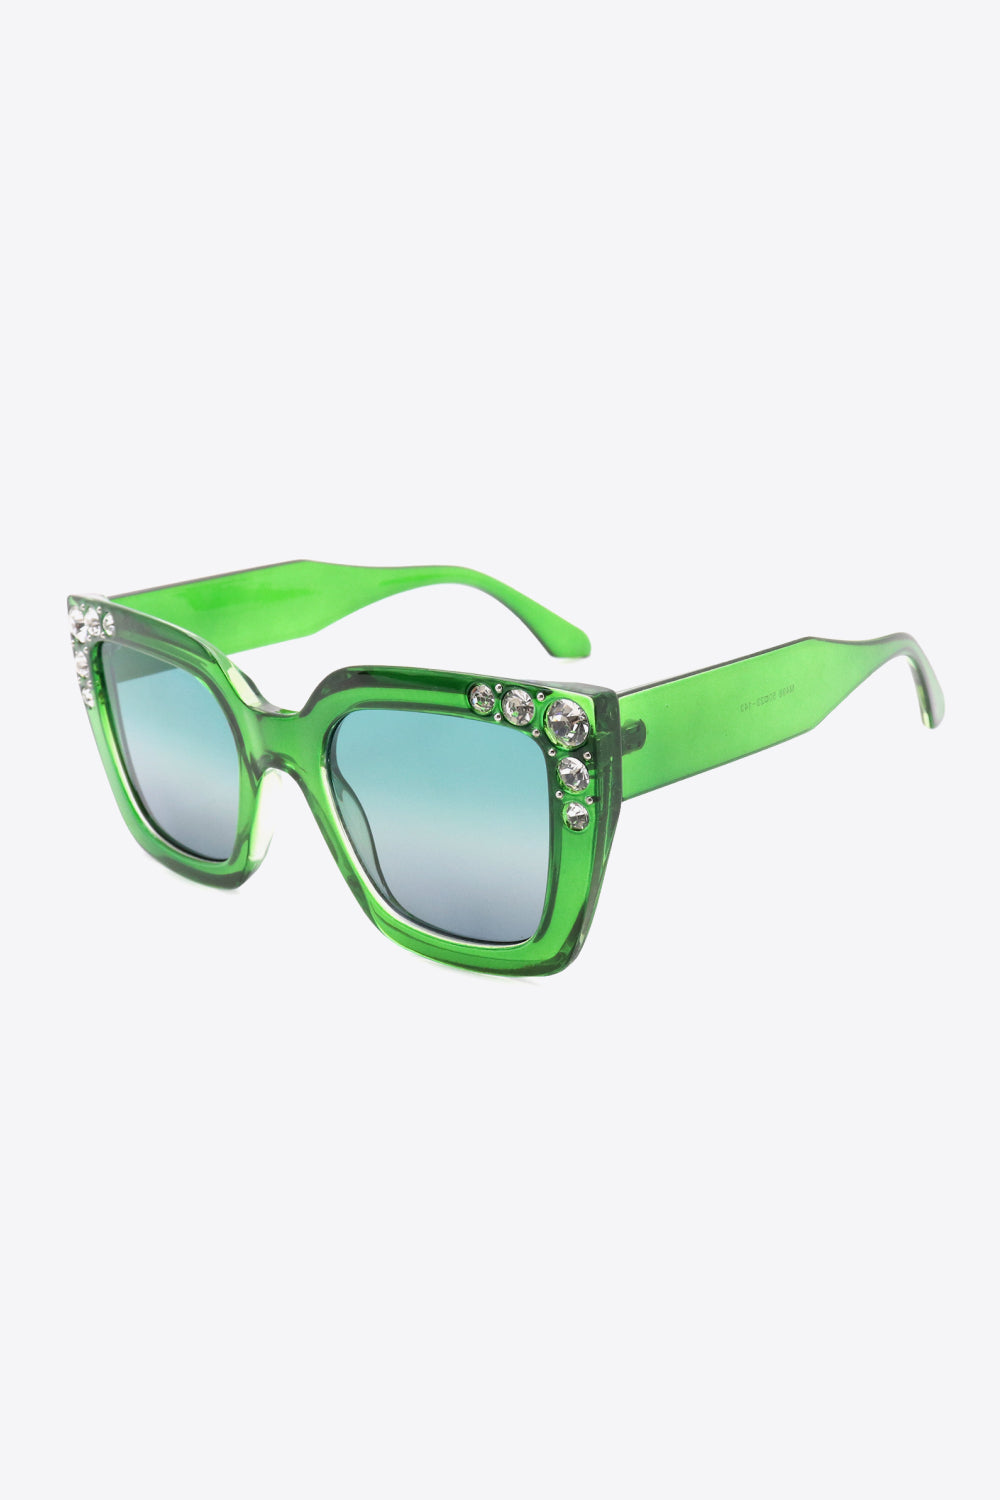 Rhinestone Polycarbonate Sunglasses